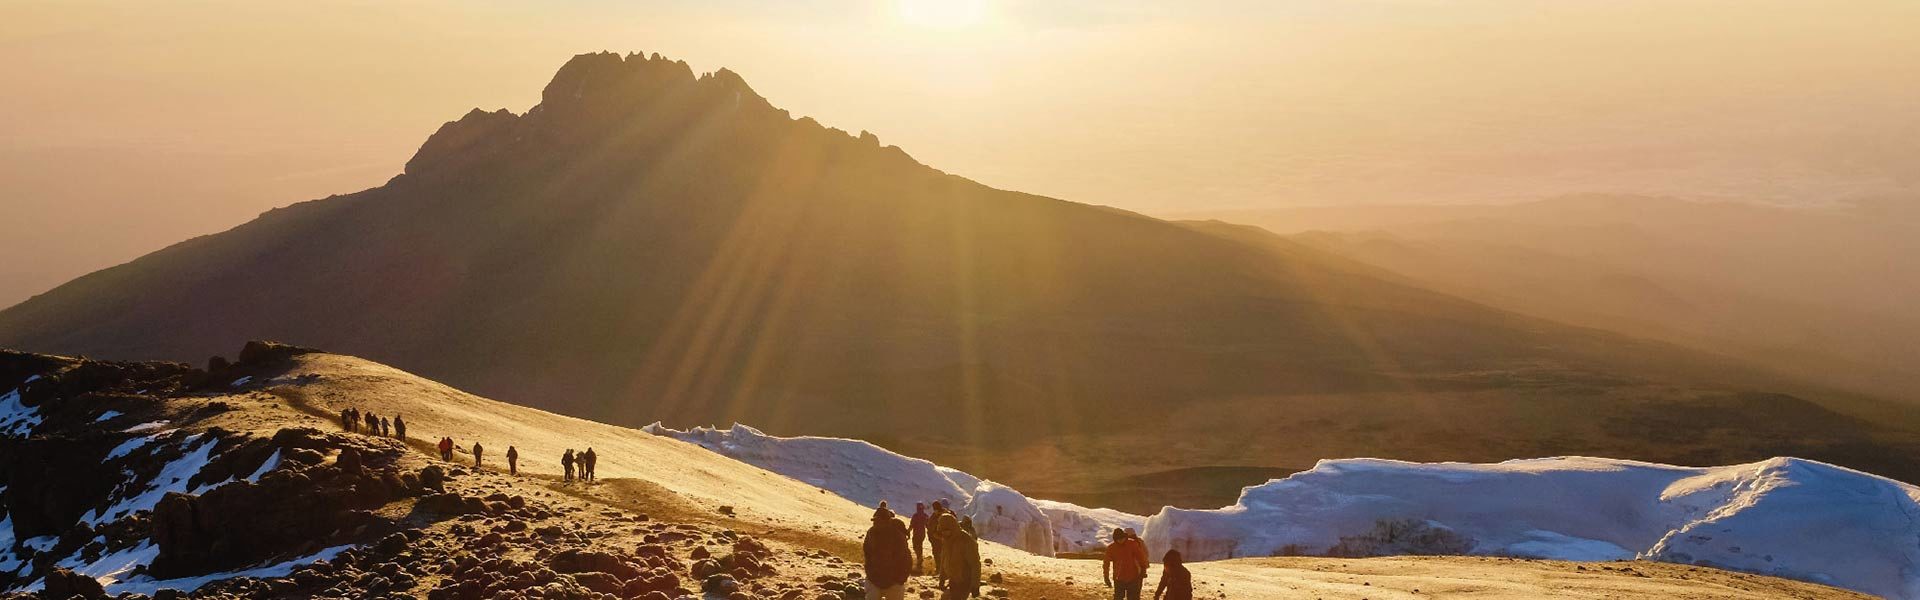 Summit Night, Kilimanjaro